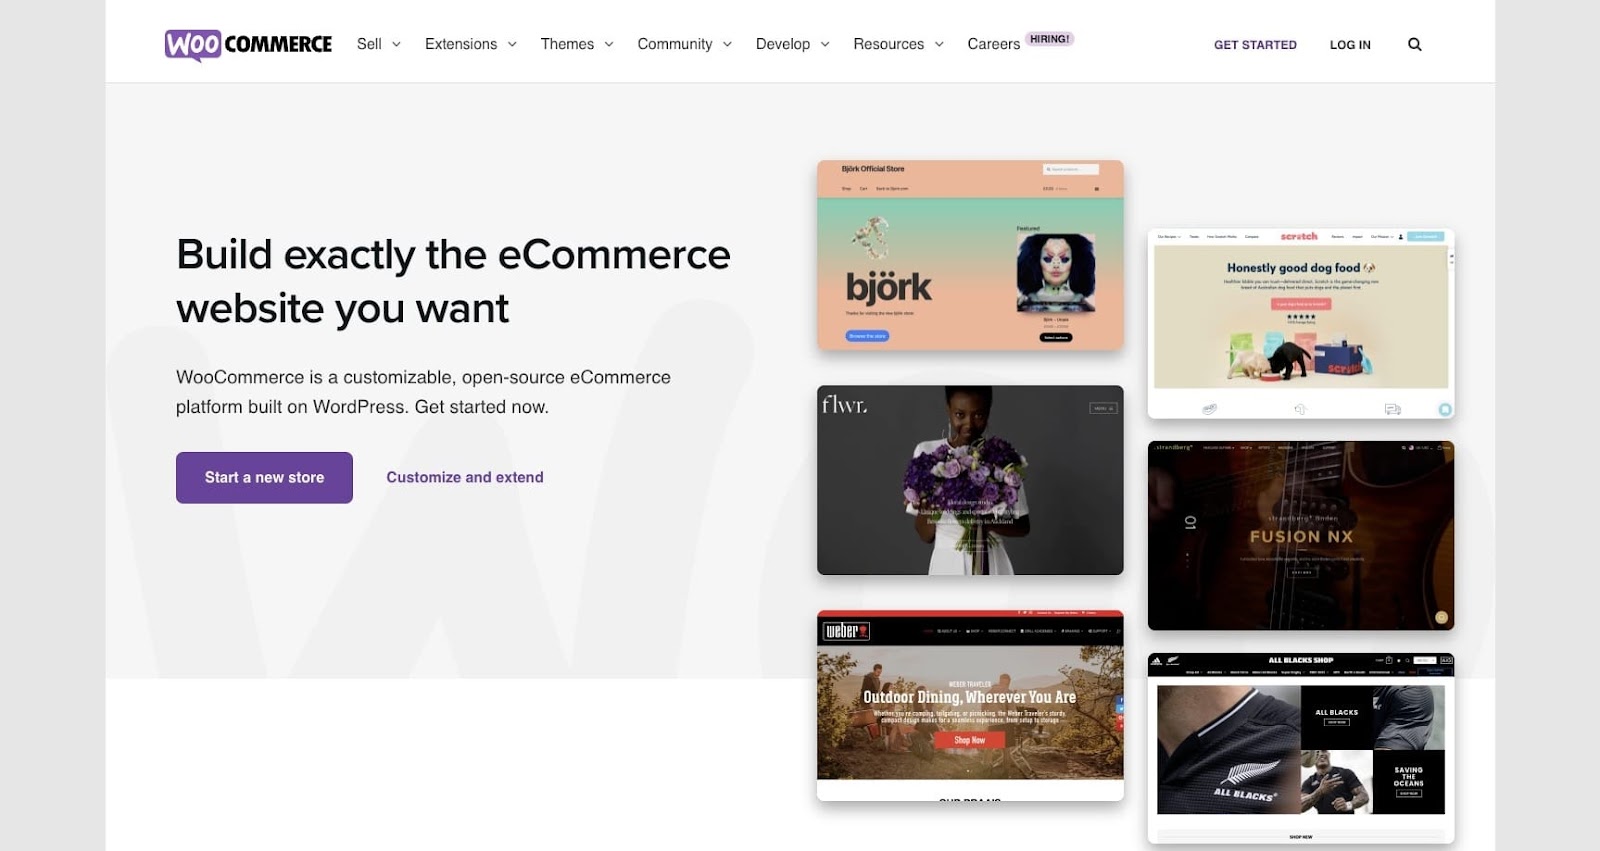 woocommerce ecommerce online selling platform homepage